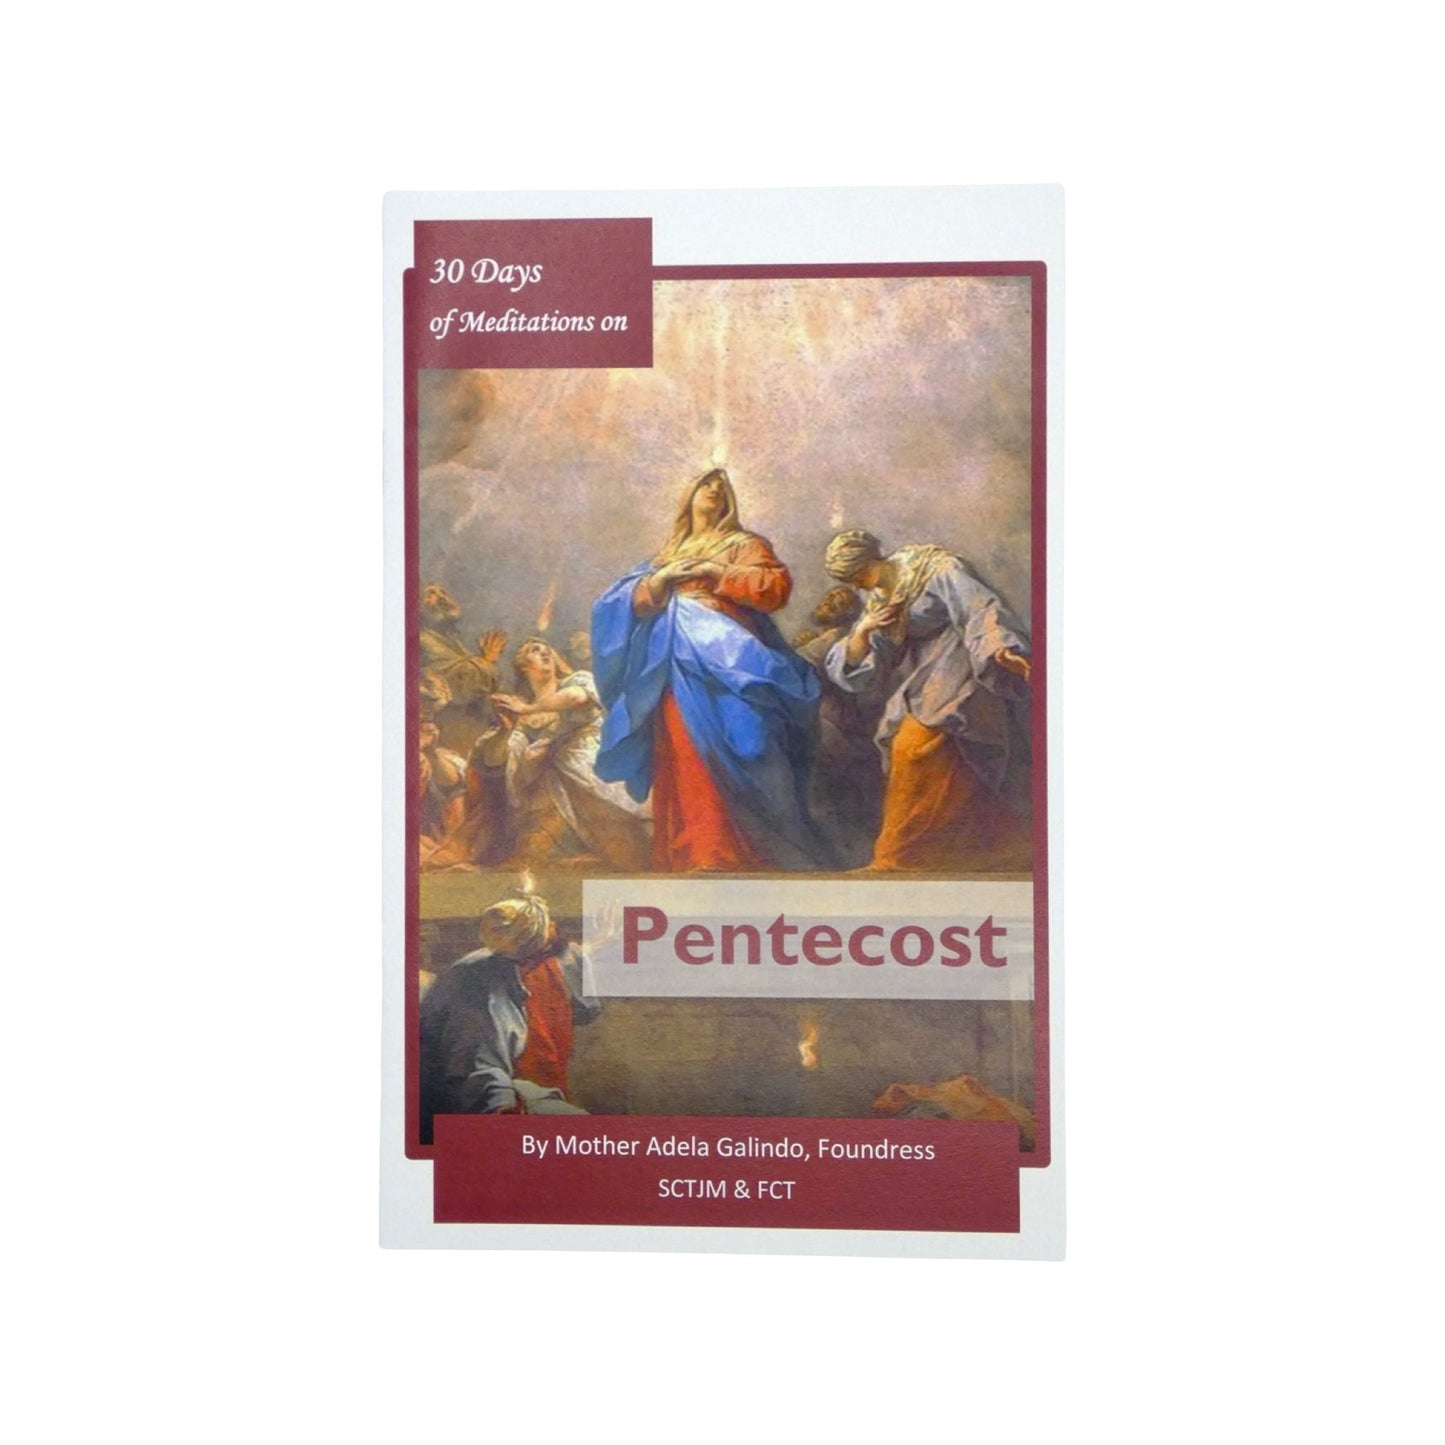 30 Days of Meditations on Pentecost by Mother Adela, SCTJM Foundress